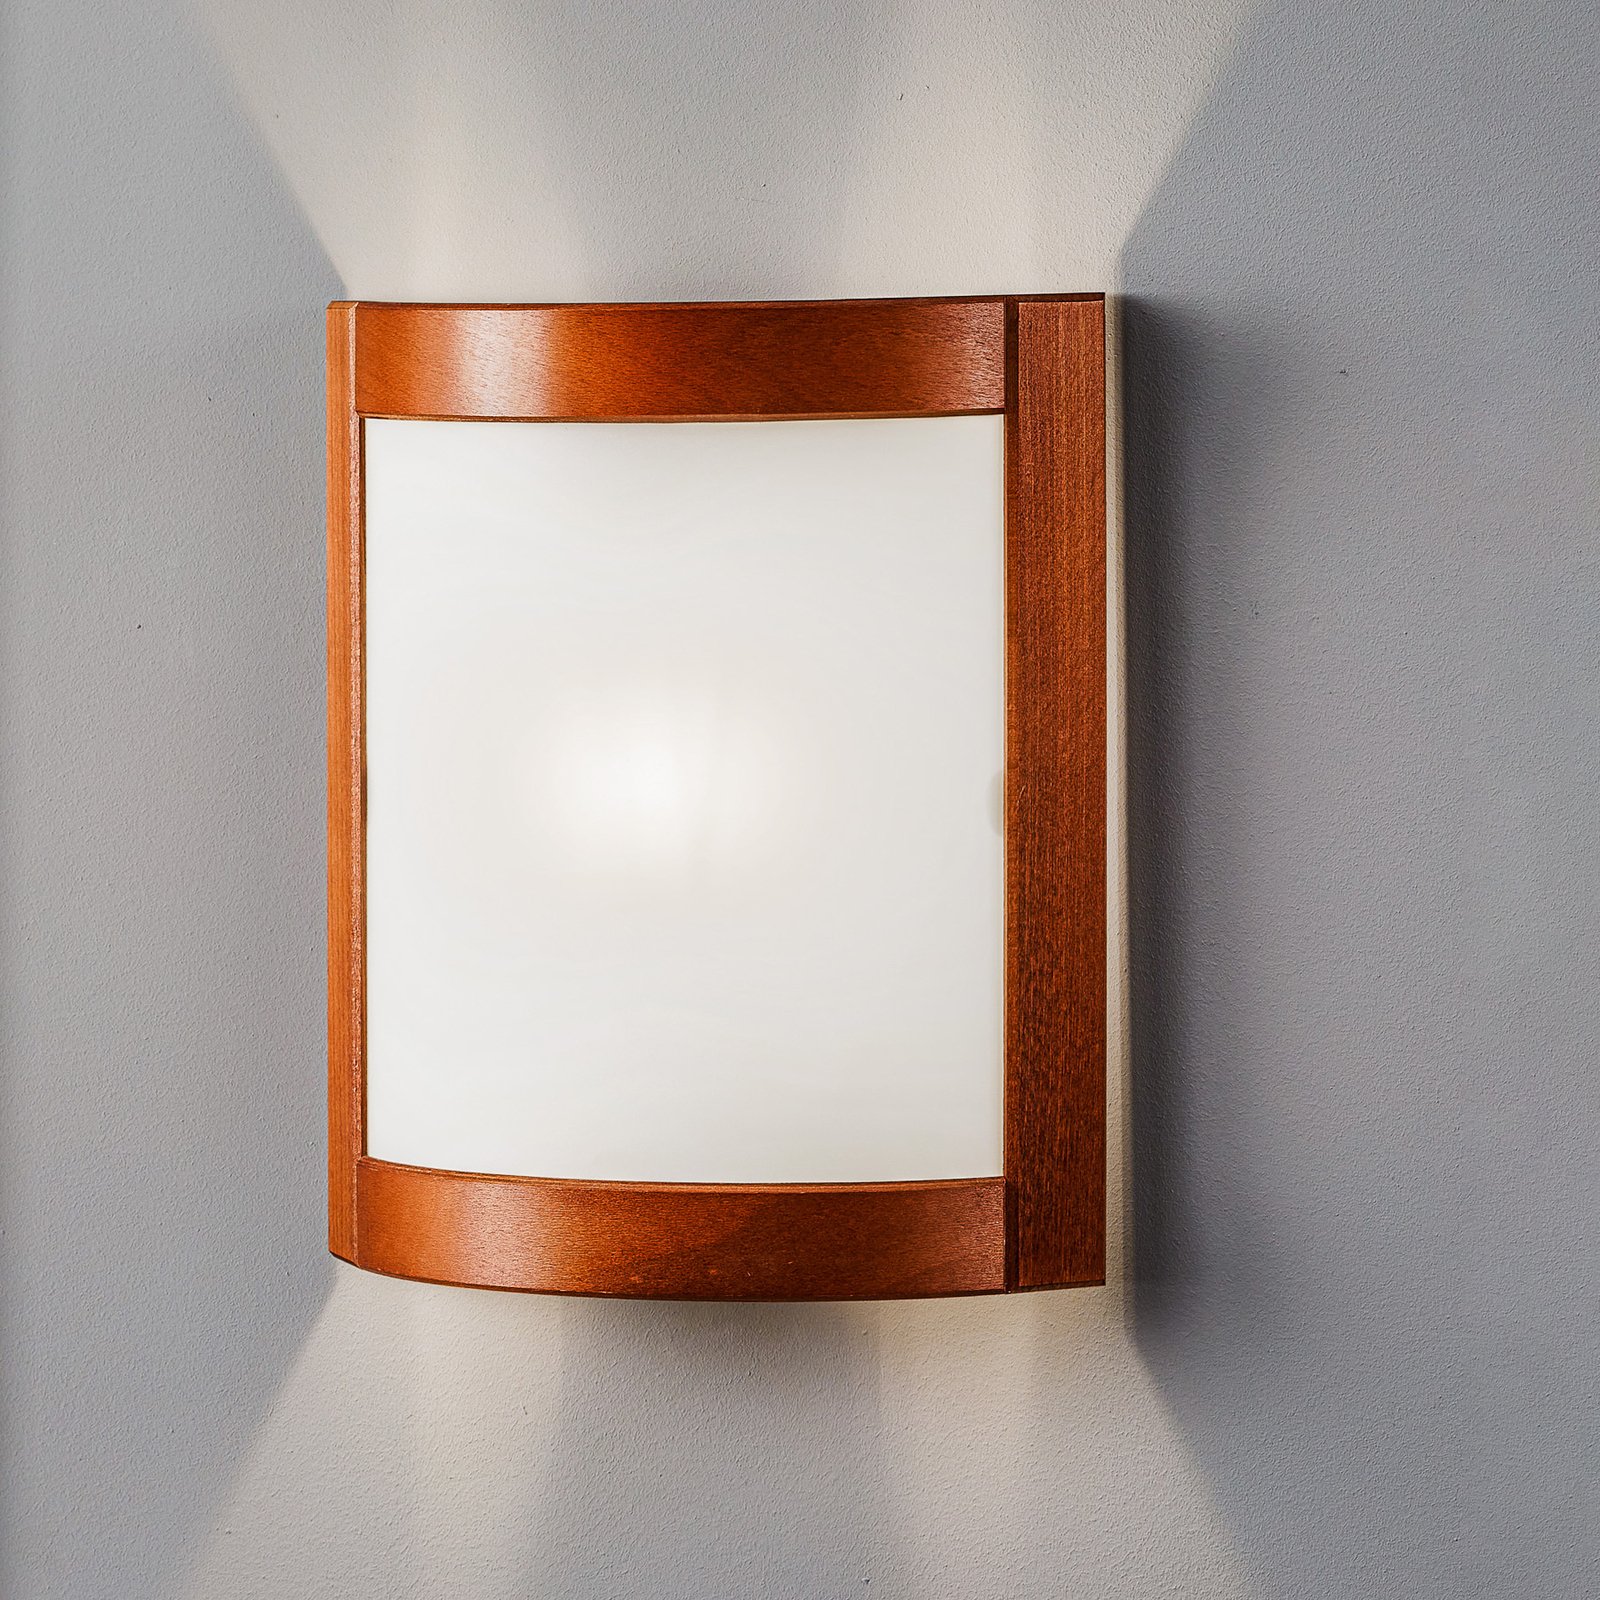 Zanna wall light made of wood, 34 cm high, rustic